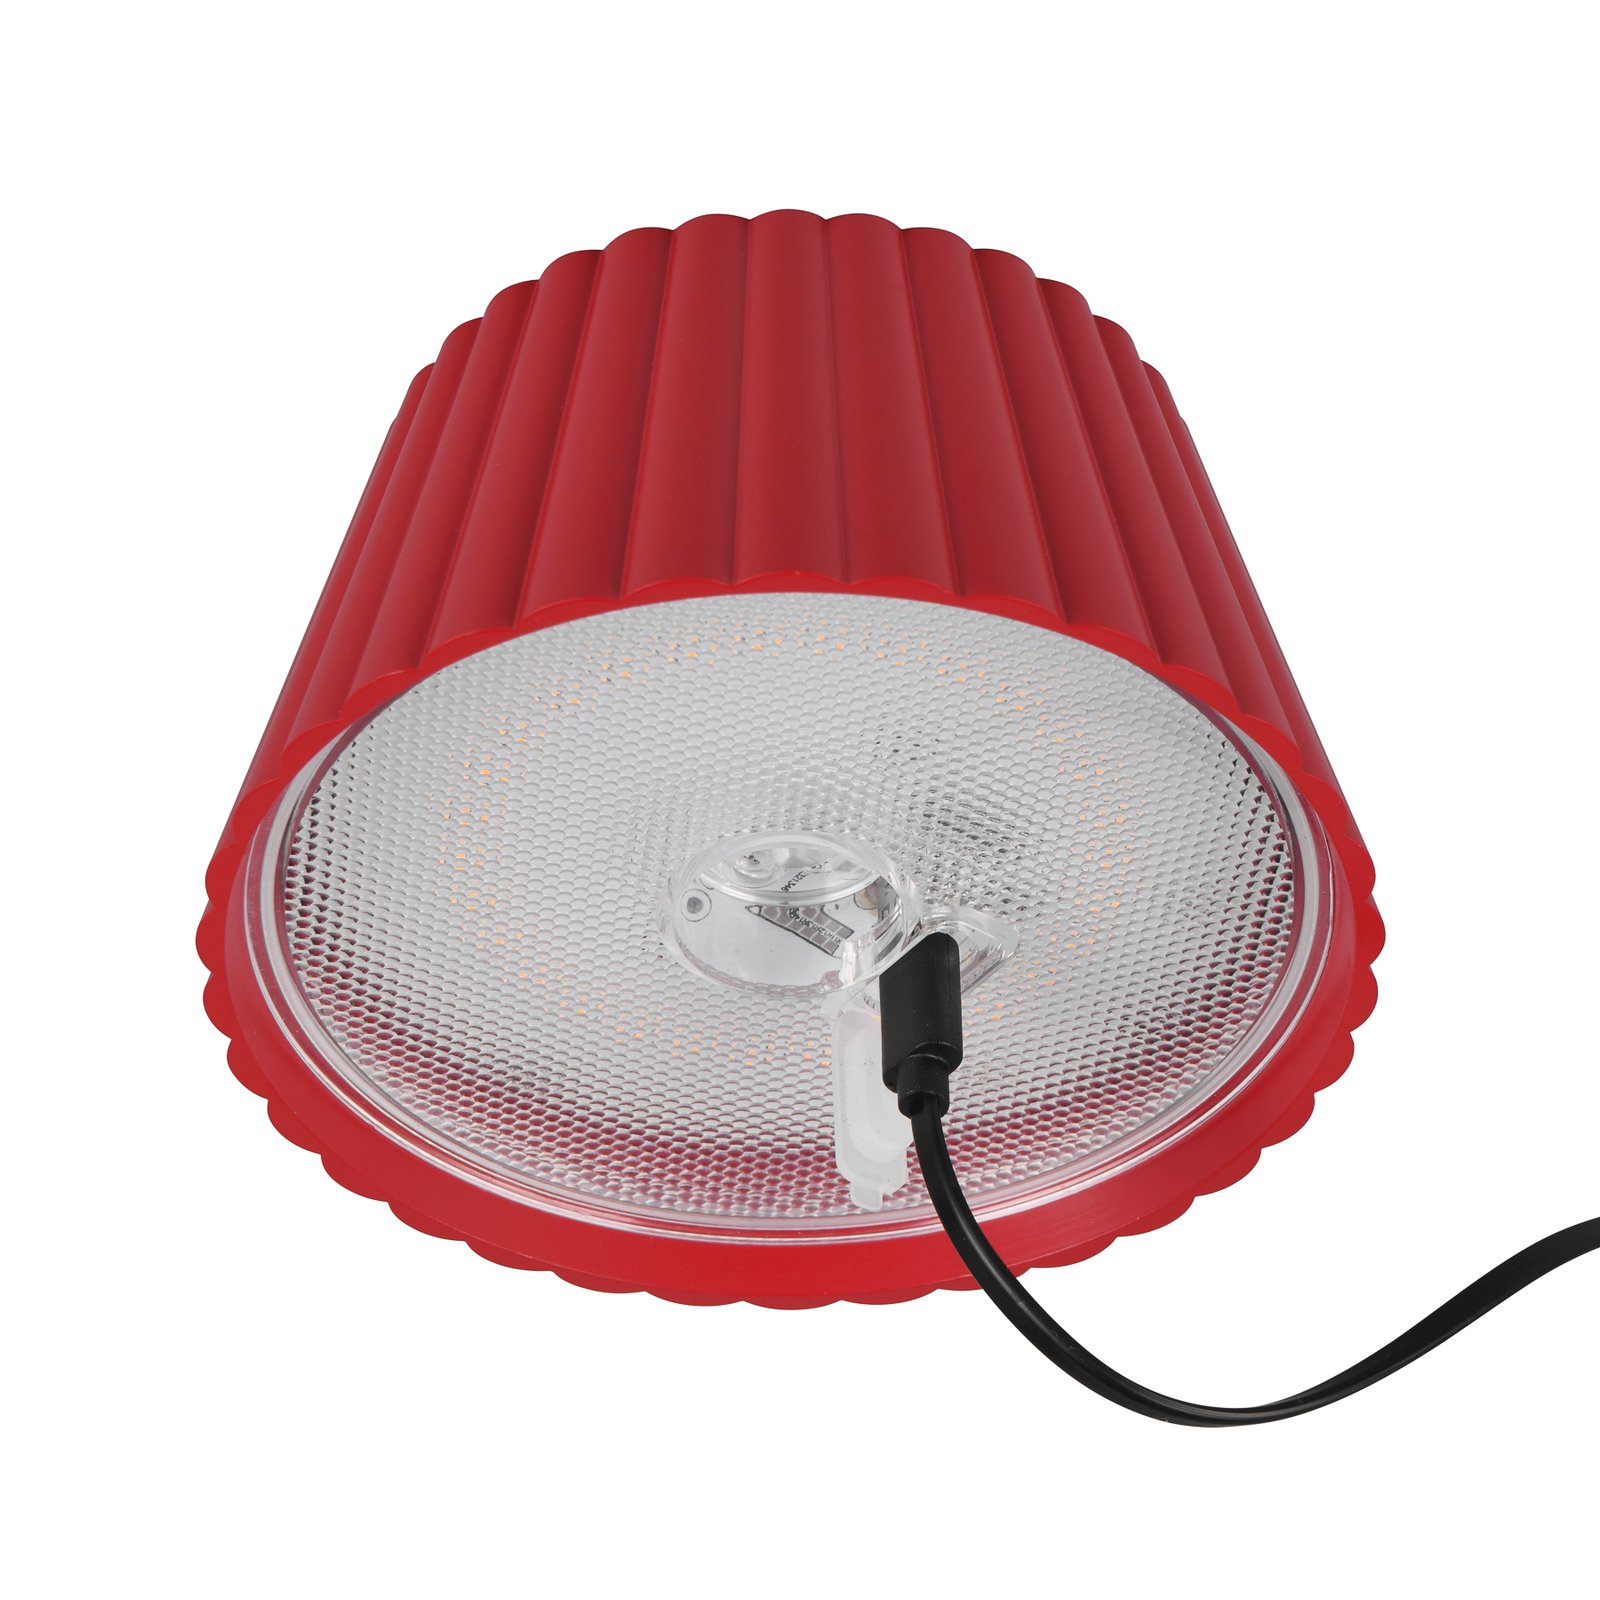 LED-Akku-Tischlampe Suarez, rot, Höhe 39 cm, Metall, dimmbar